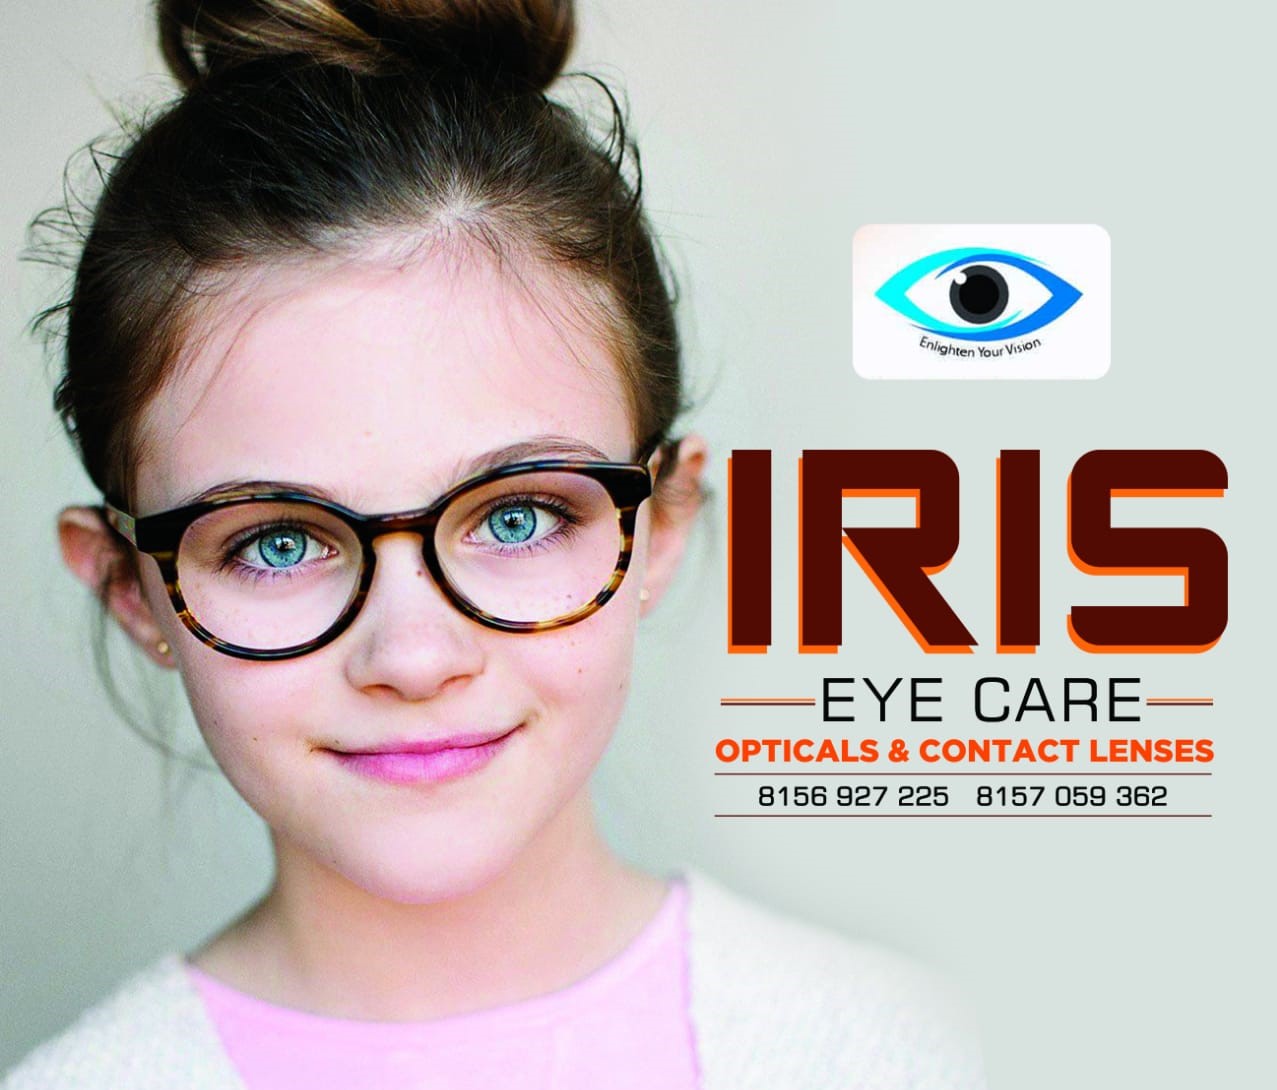 Iris Eye Care - Best Eye Care...